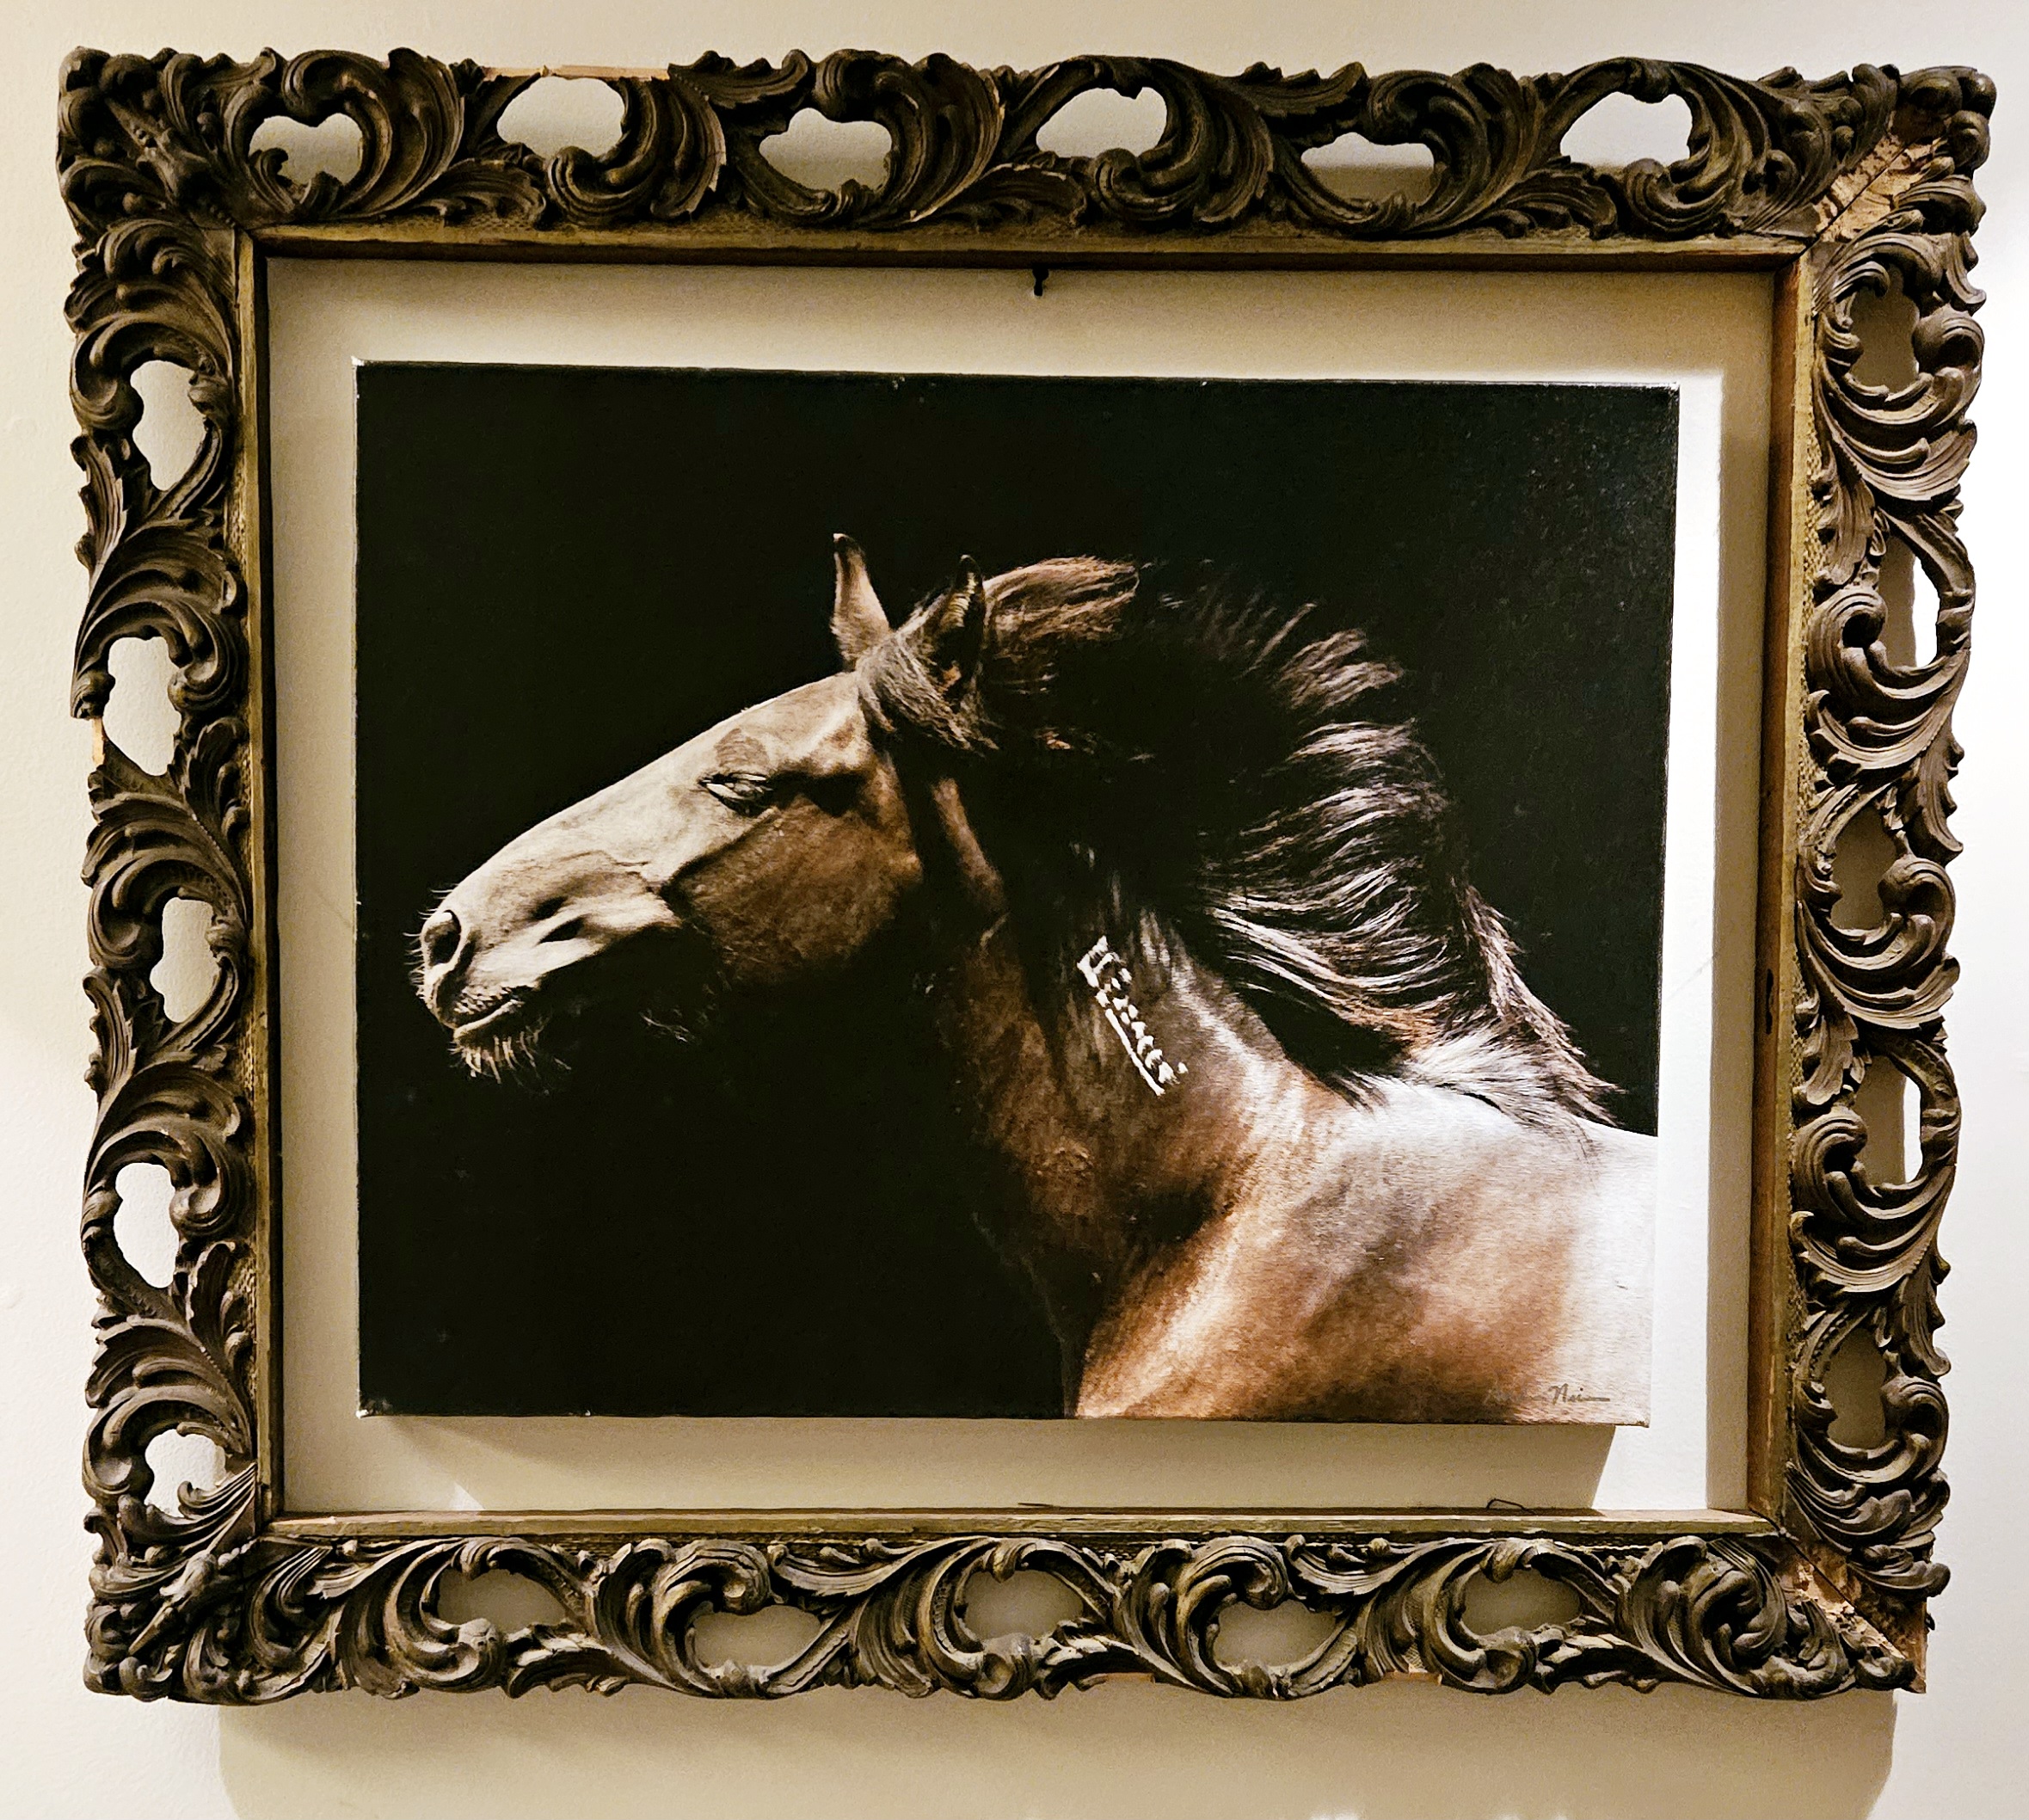 Digital photograph of a horse by Columbia art teacher Andrea Neiman